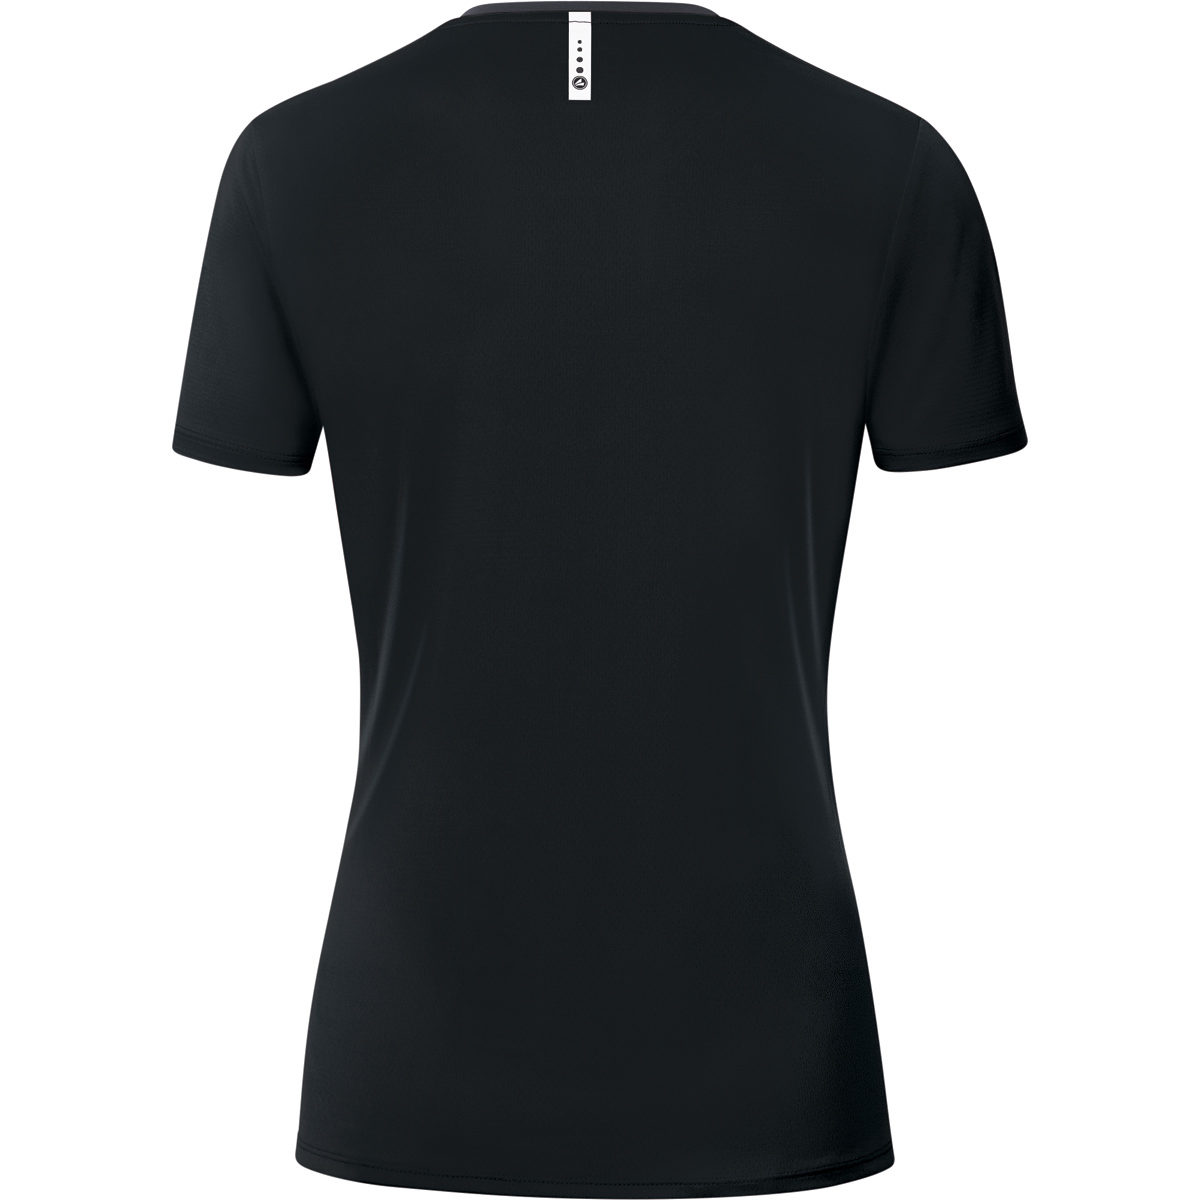 schwarz/anthrazit, T-Shirt 6120 Champ JAKO Damen, Gr. 2.0 44,